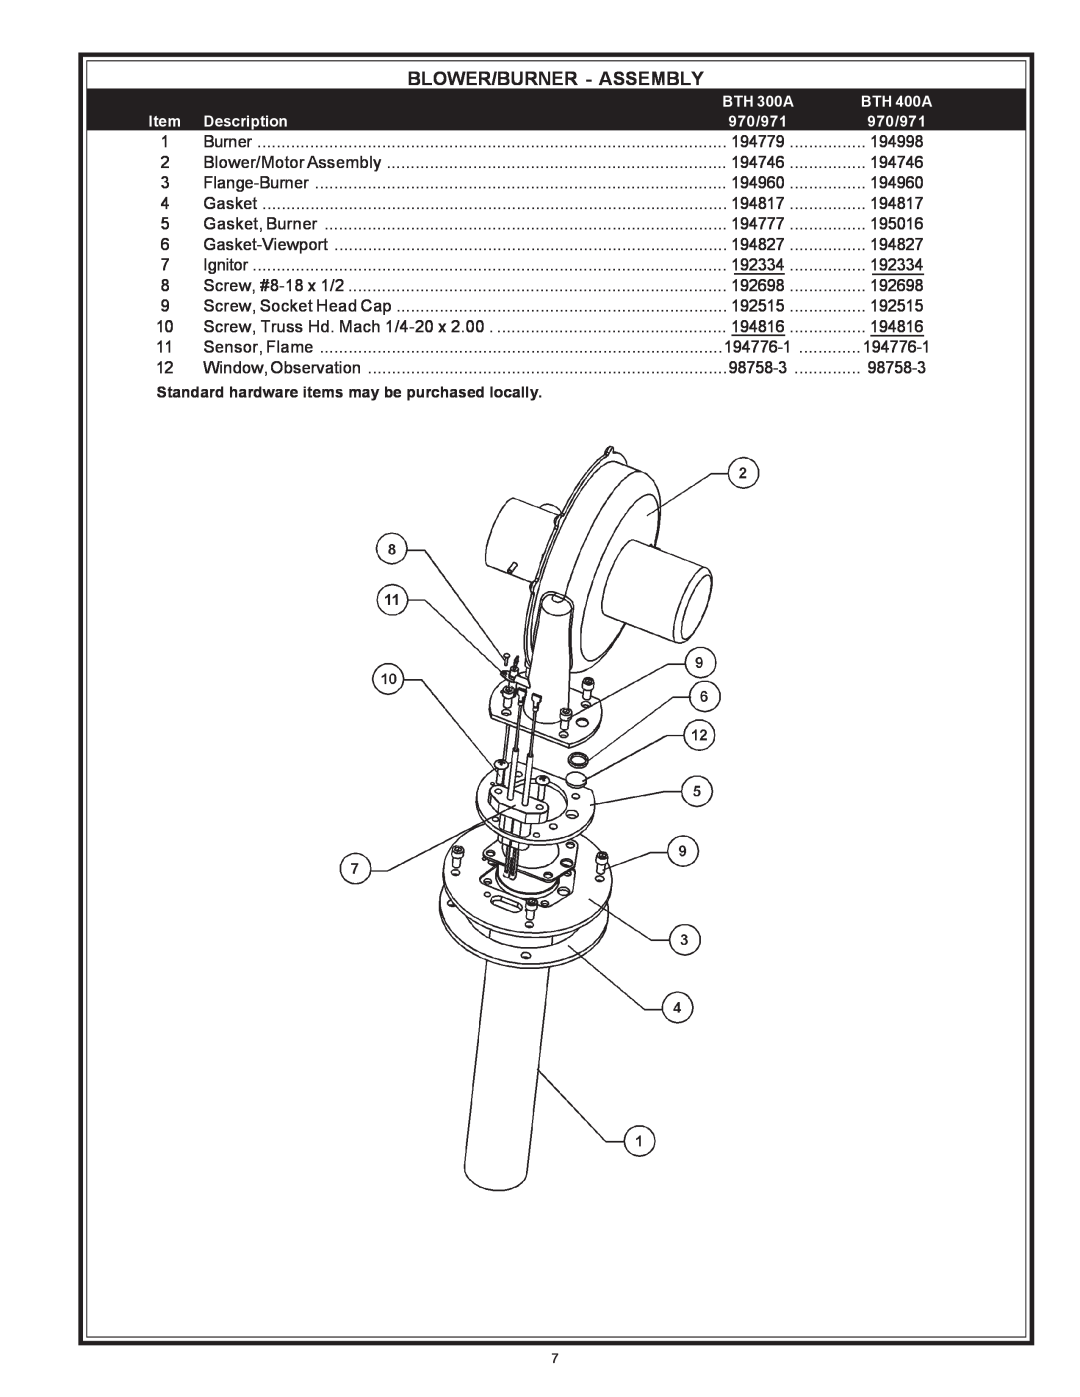 A.O. Smith 970 Series manual Blower/Burner - Assembly, BTH 300A, BTH 400A, Description, 970/971 